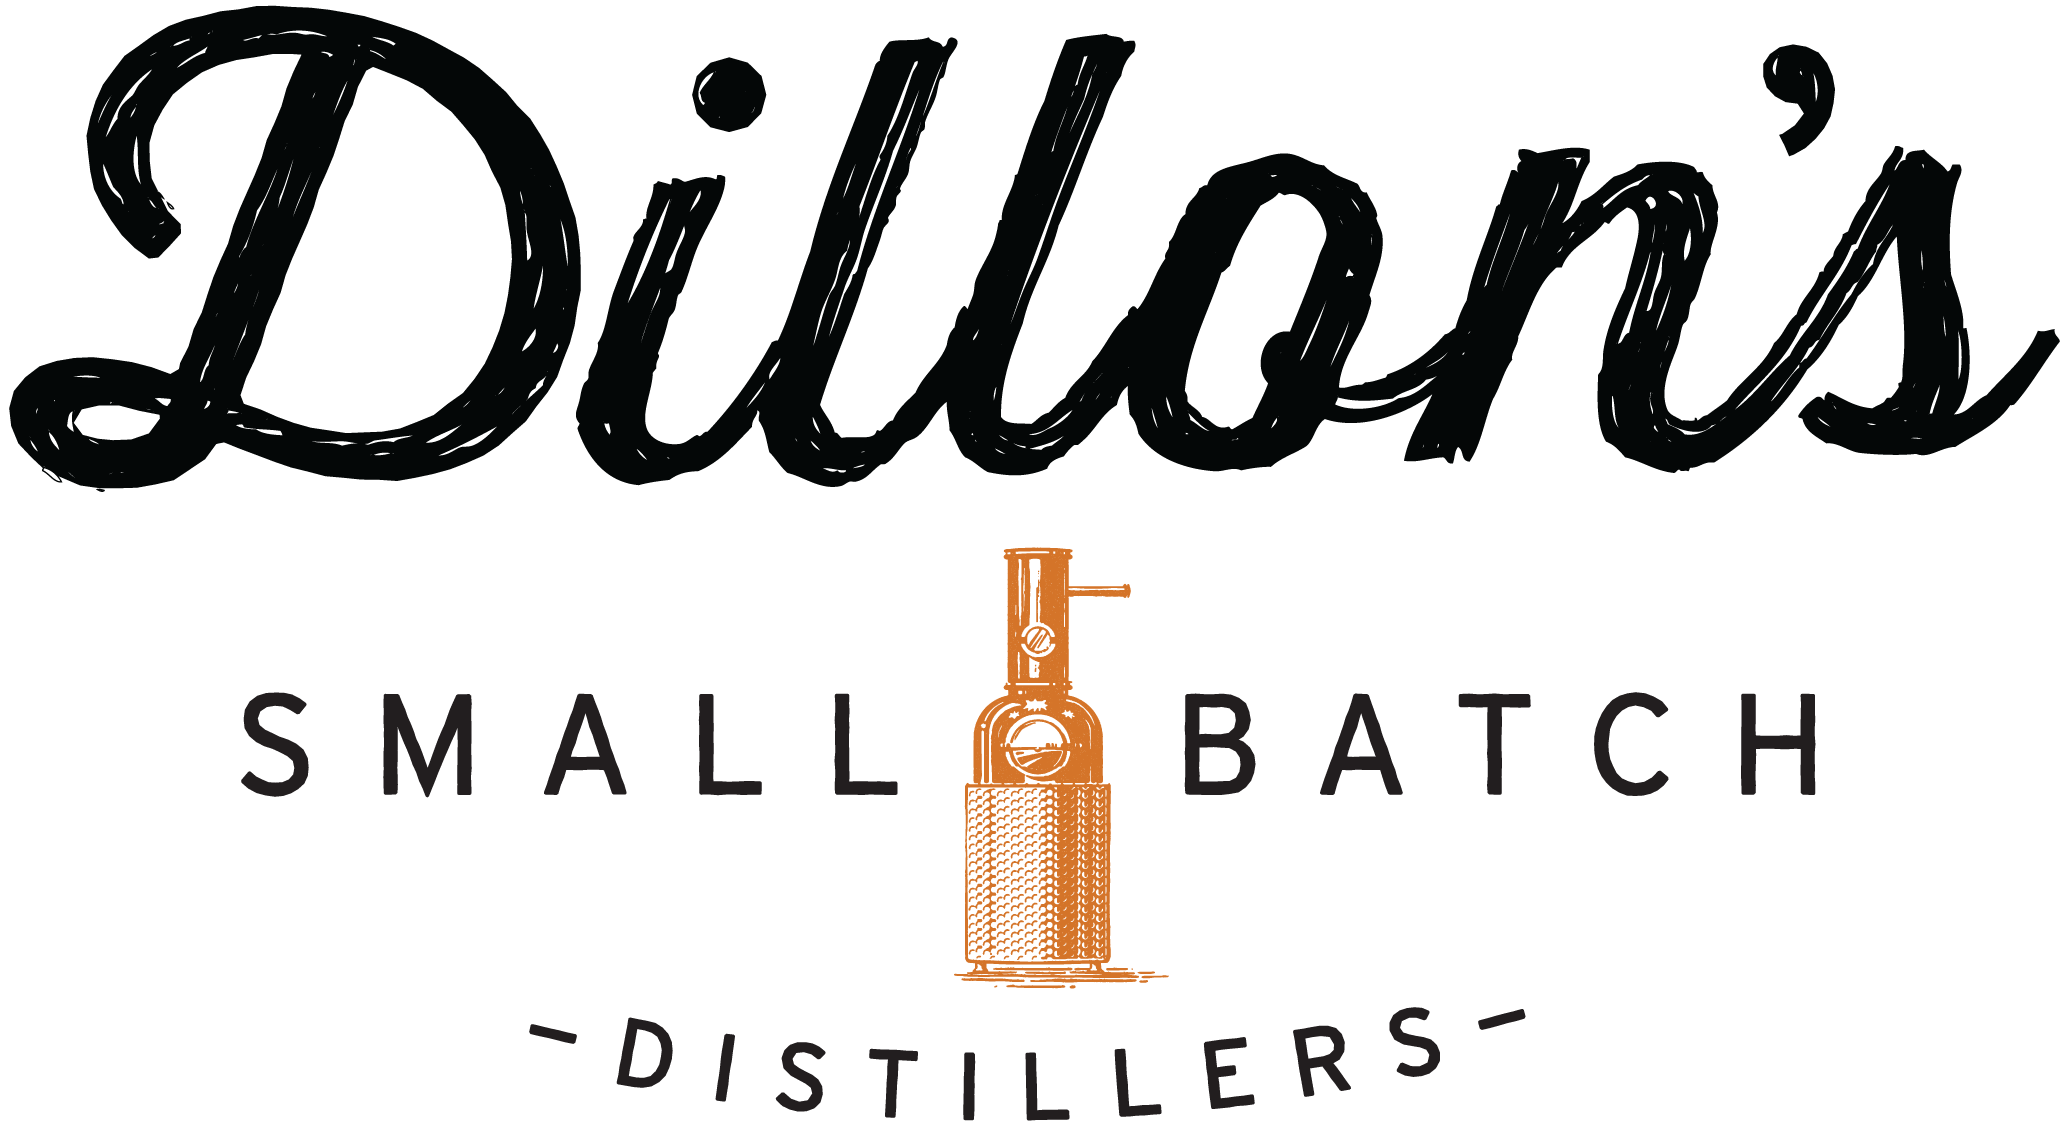 Crocs Jibbitz - Dillon's Small Batch Distillers